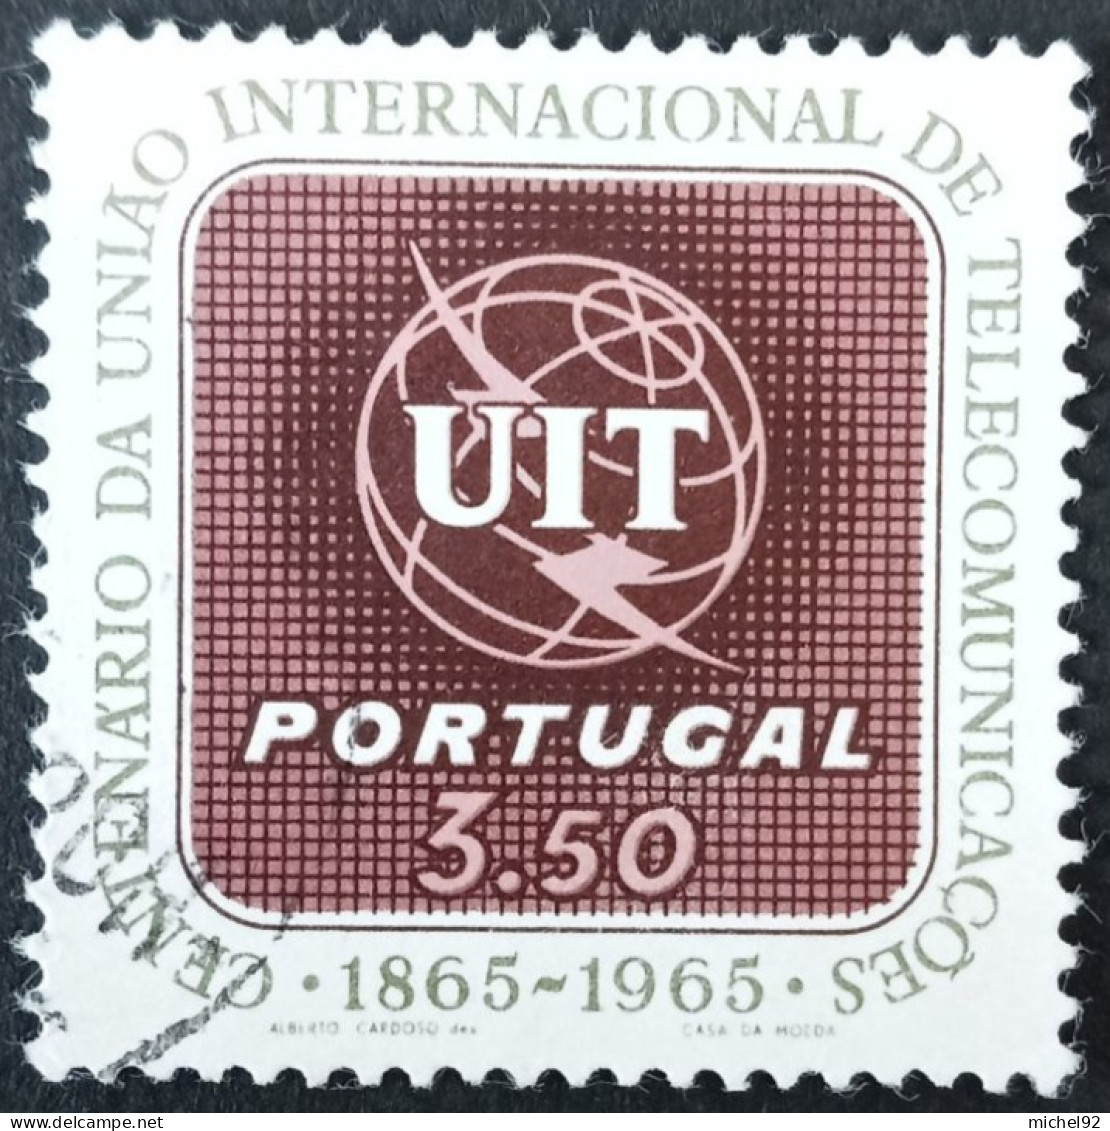 Portugal 1965 - YT N°964 - Oblitéré - Gebraucht